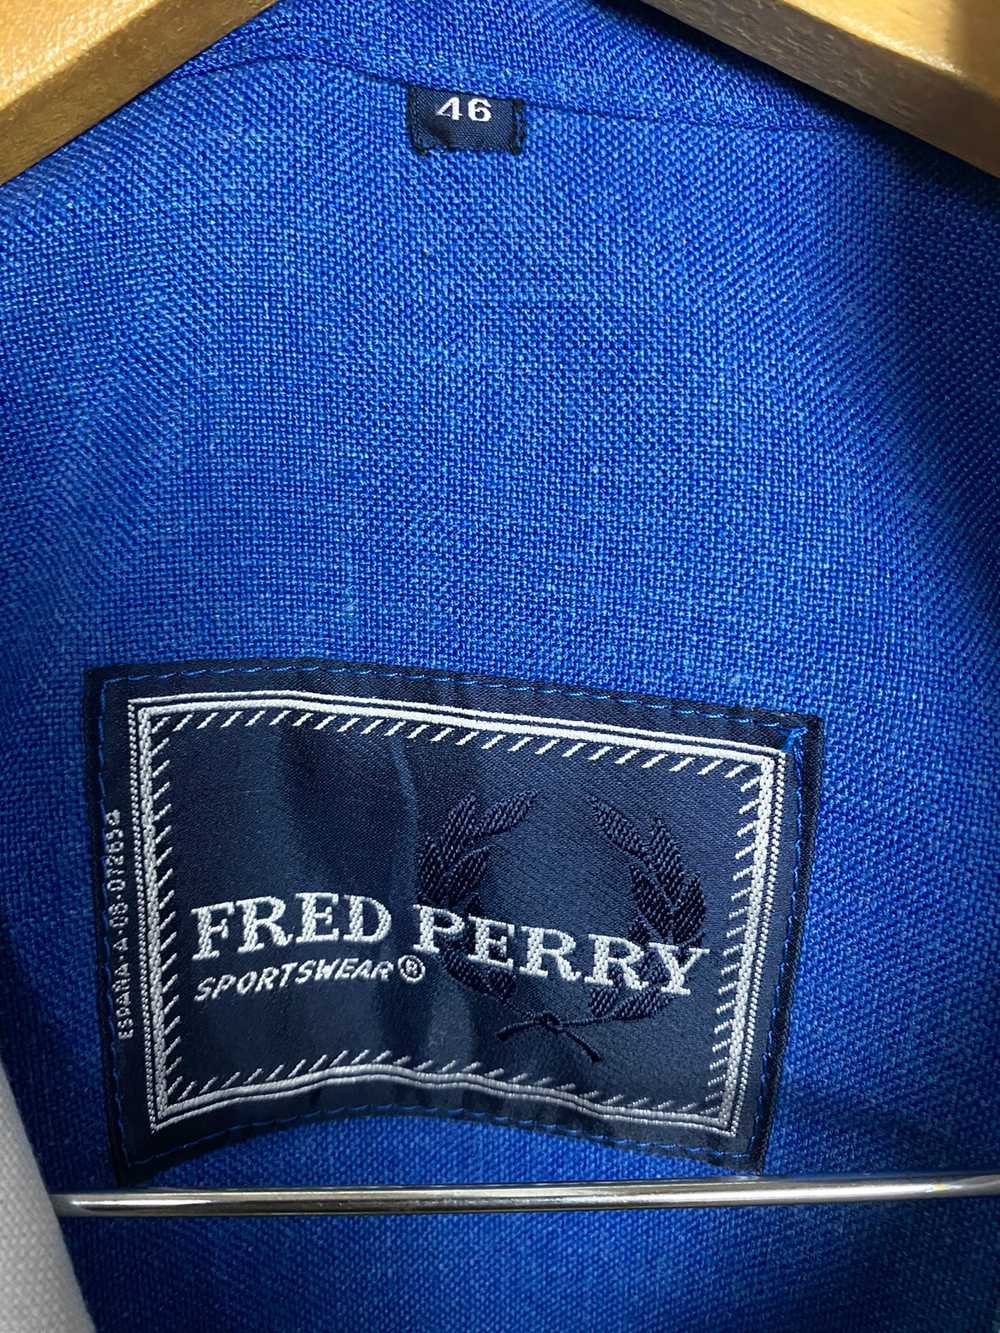 Vintage - Vintage Fred Perry Sportswear Jacket - image 7